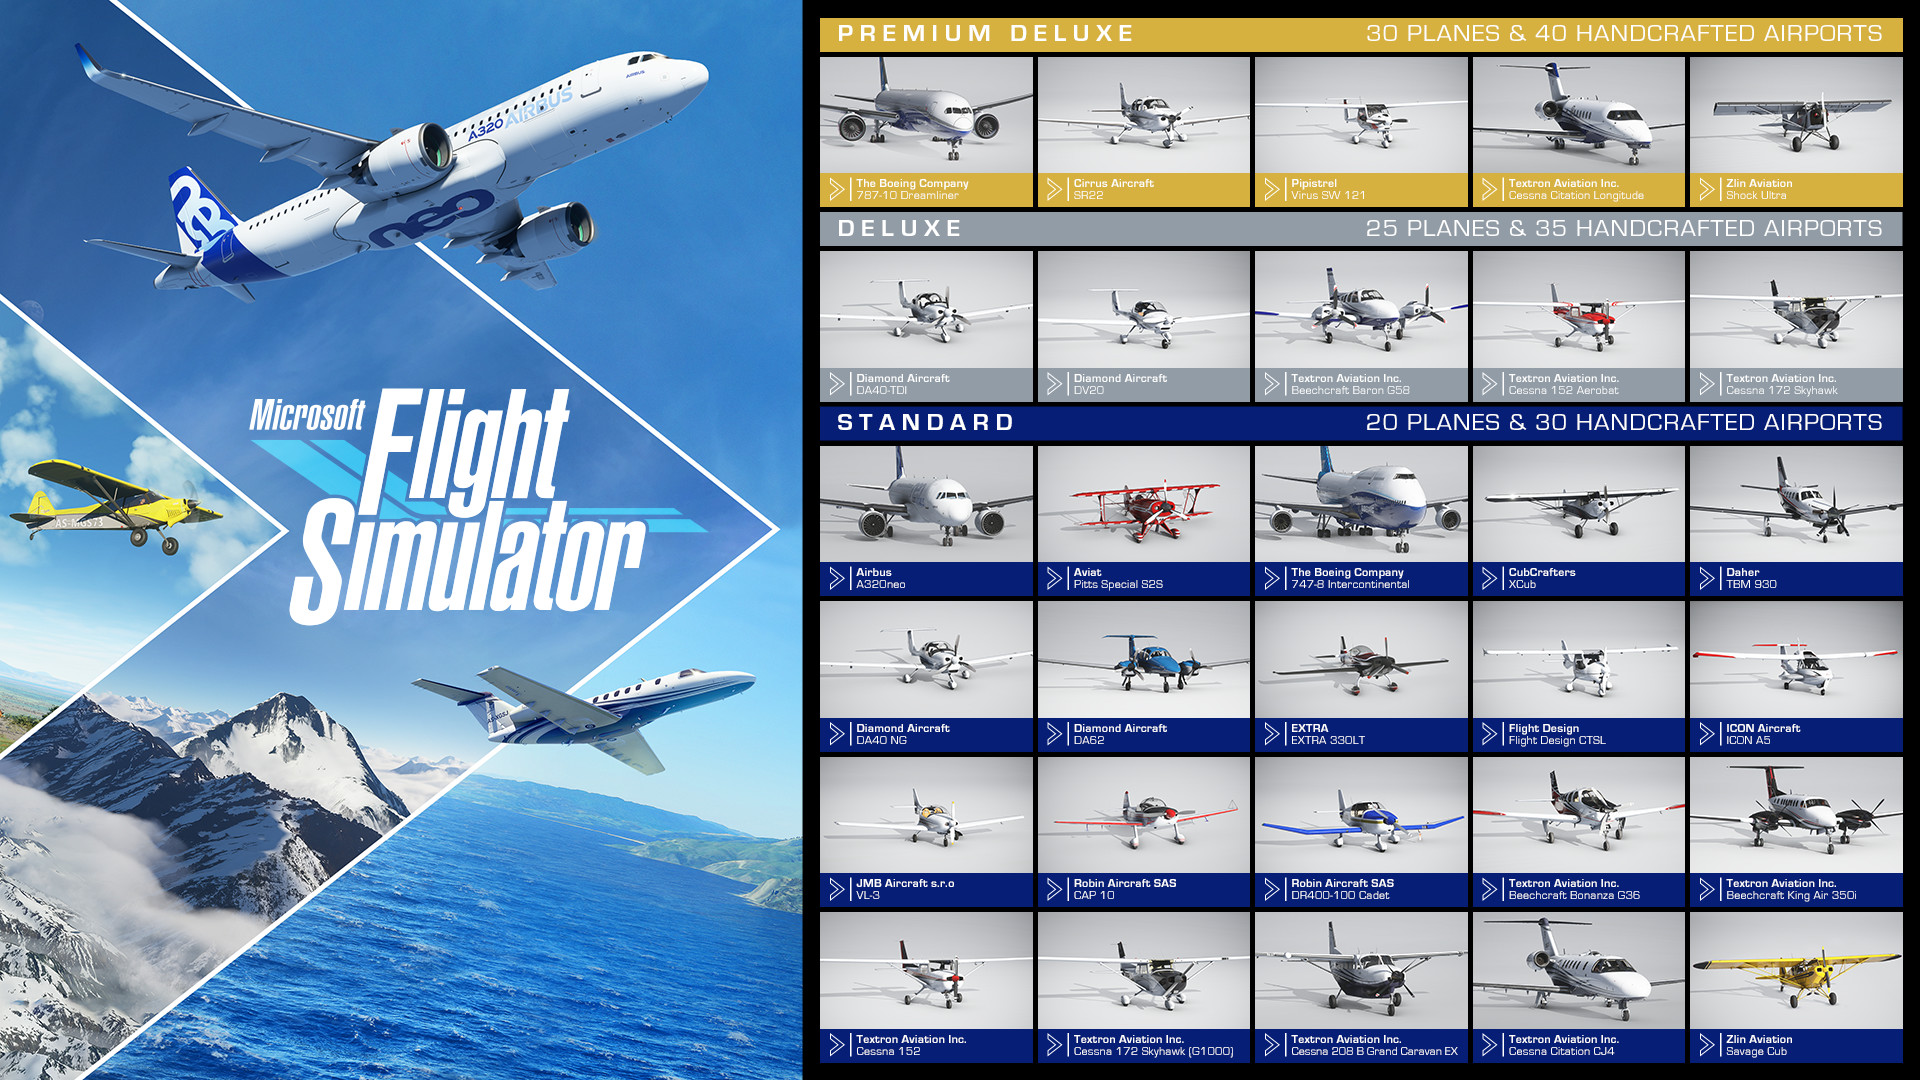 Microsoft Flight Simulator Premium Deluxe Game of the Year Edition EU Xbox Series X|S / Windows 10 CD Key, 102.81 usd